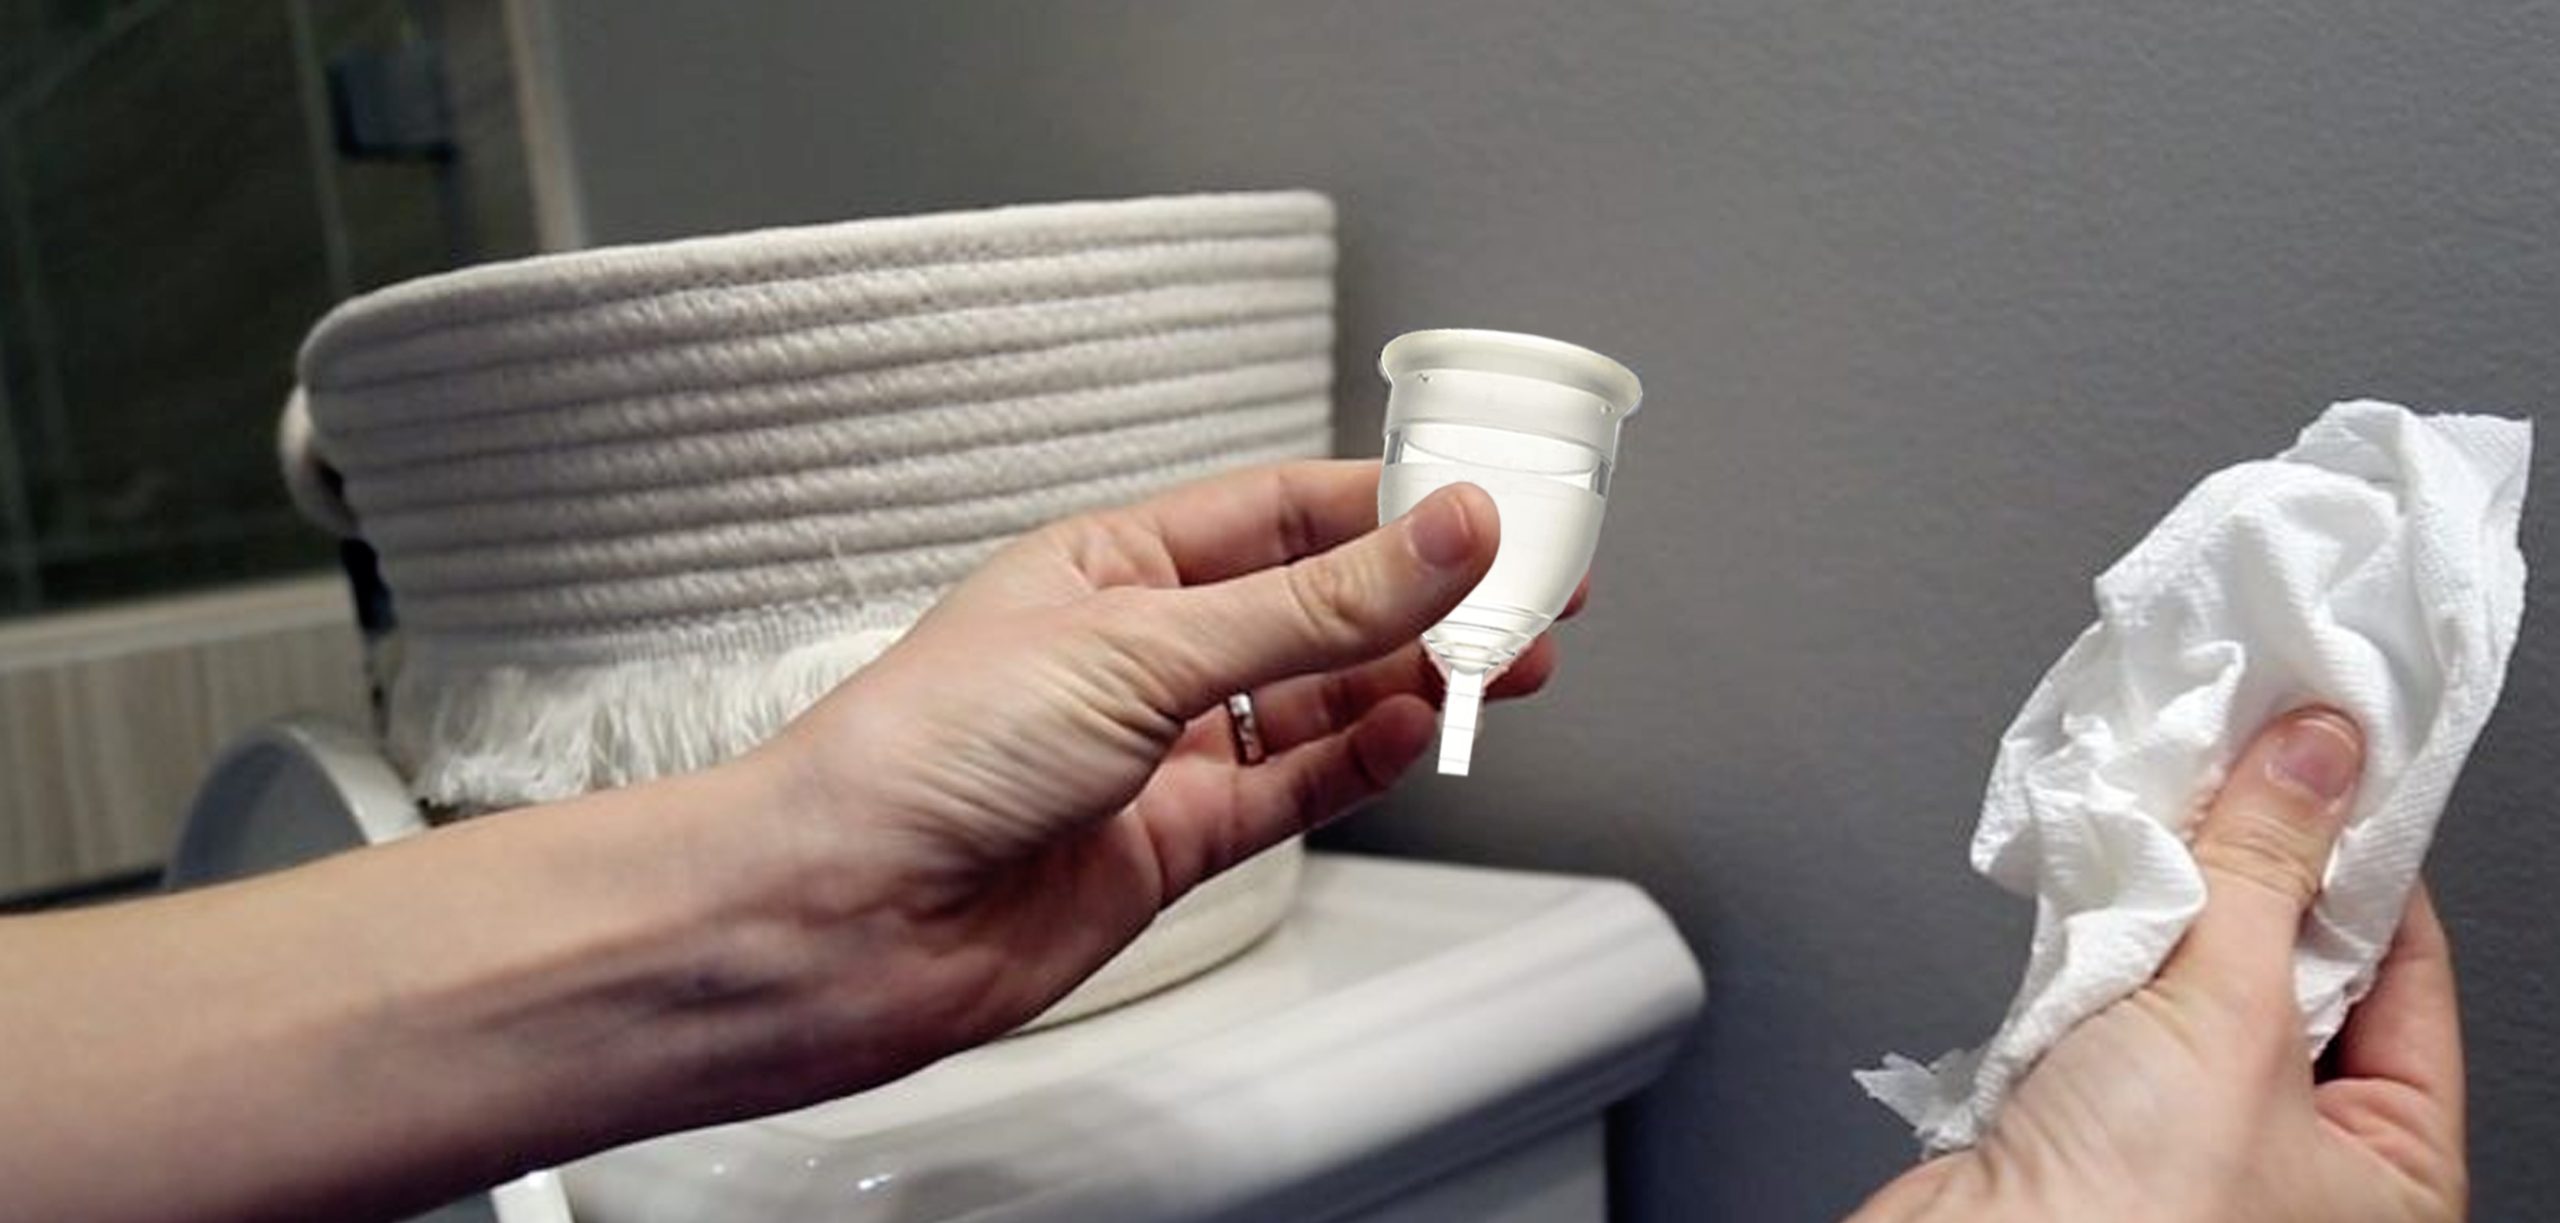 Three Ways to Sterilize Menstrual Cup